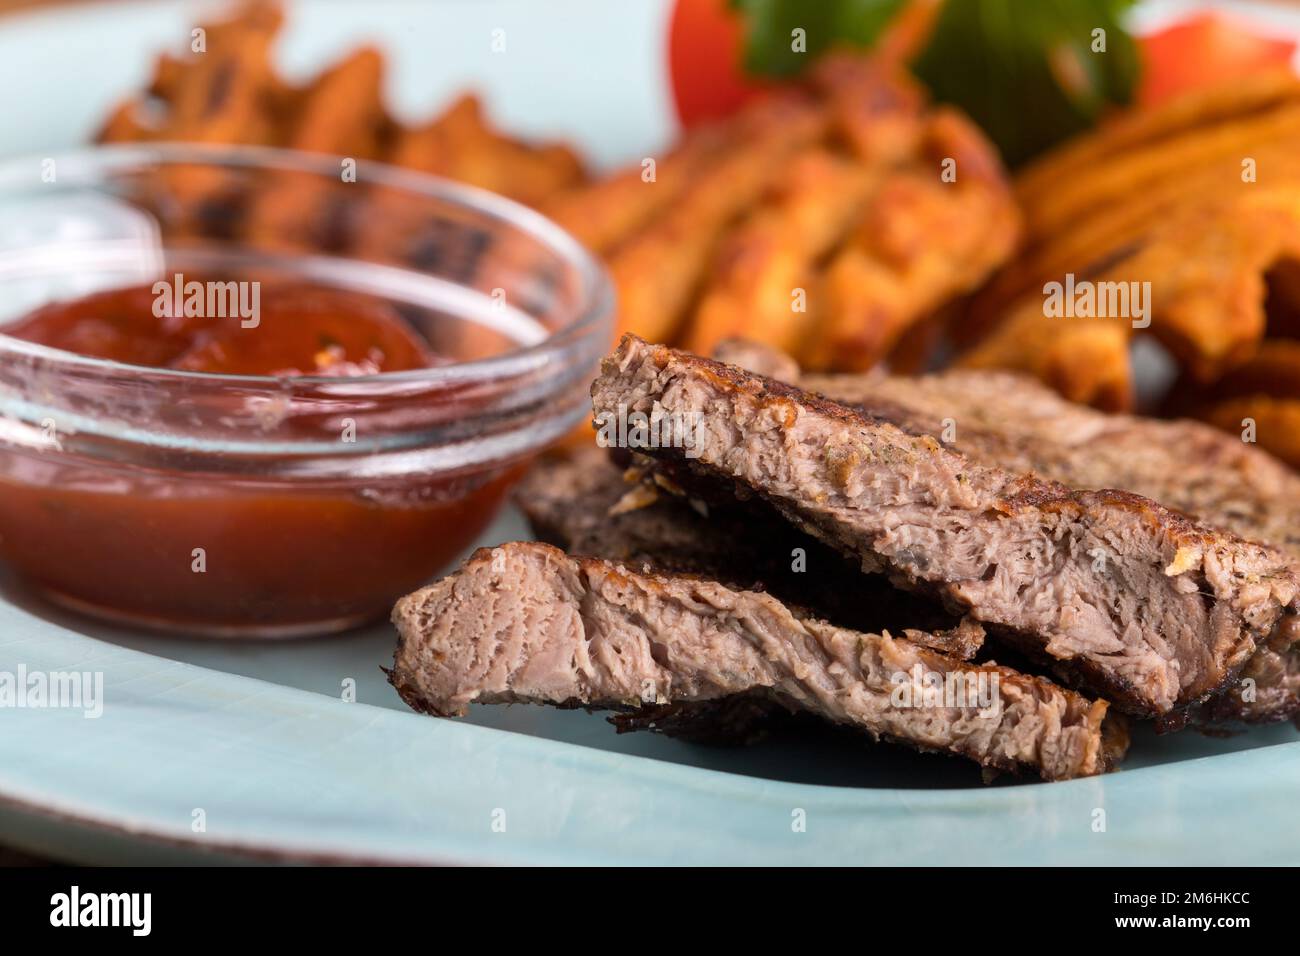 Sliced steak with potato grids Stock Photo